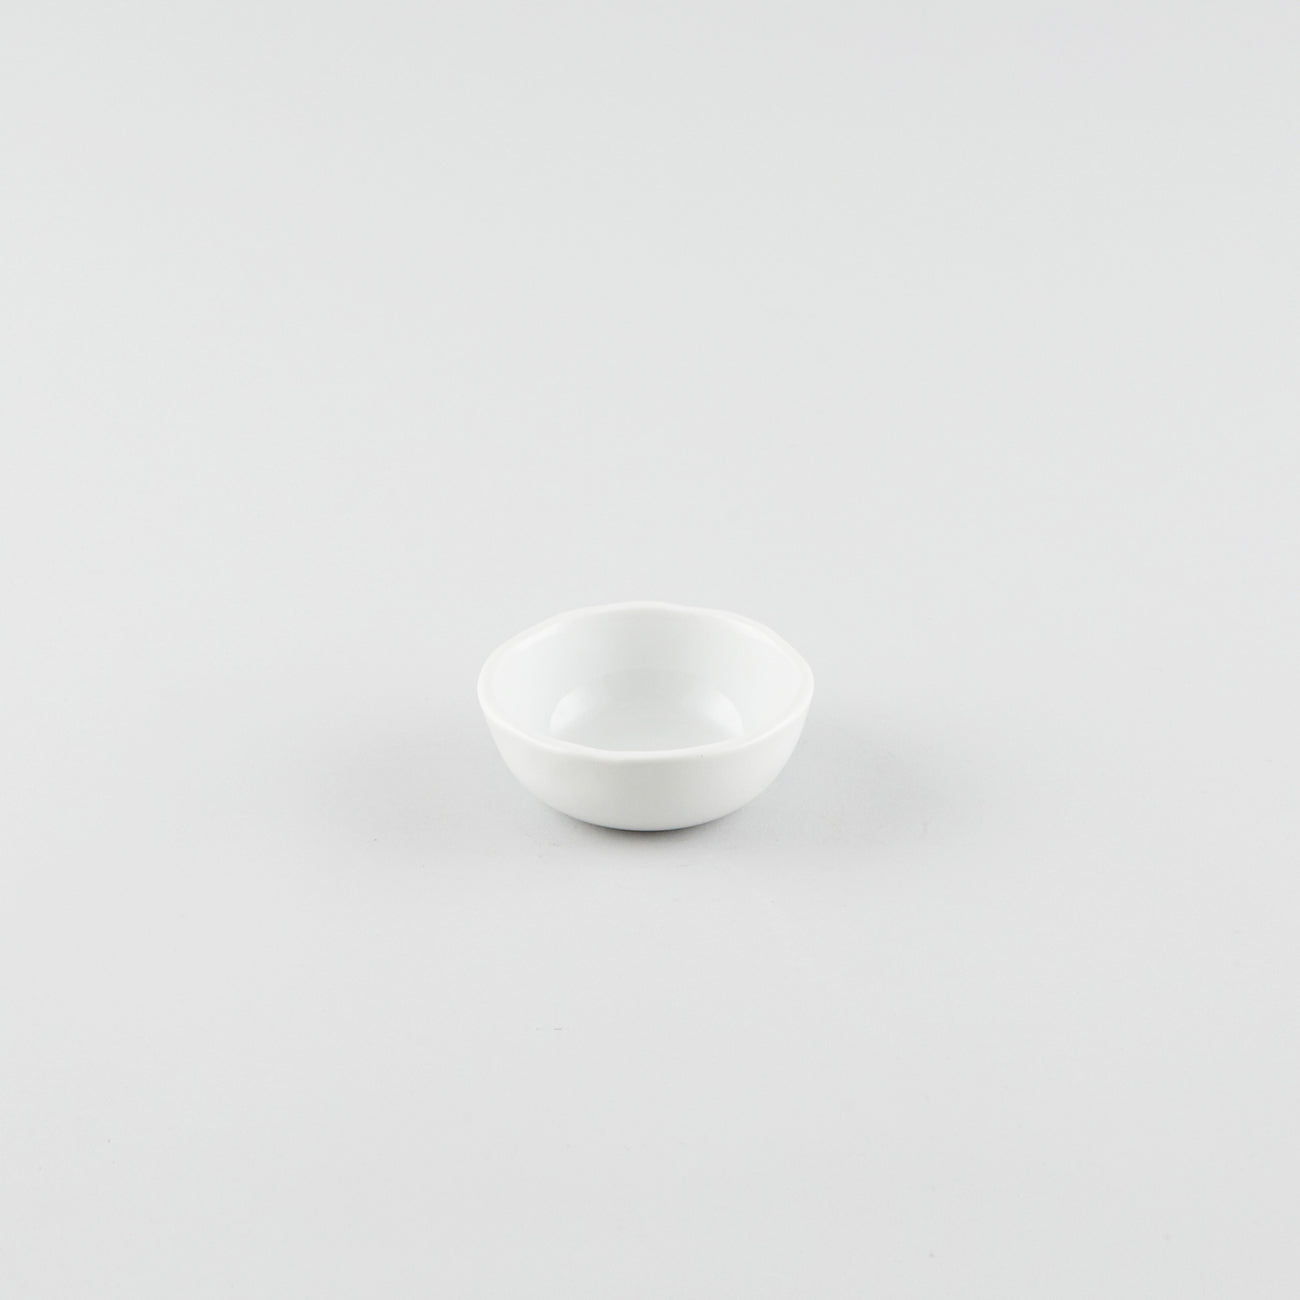 Petite White Bowl 3 oz